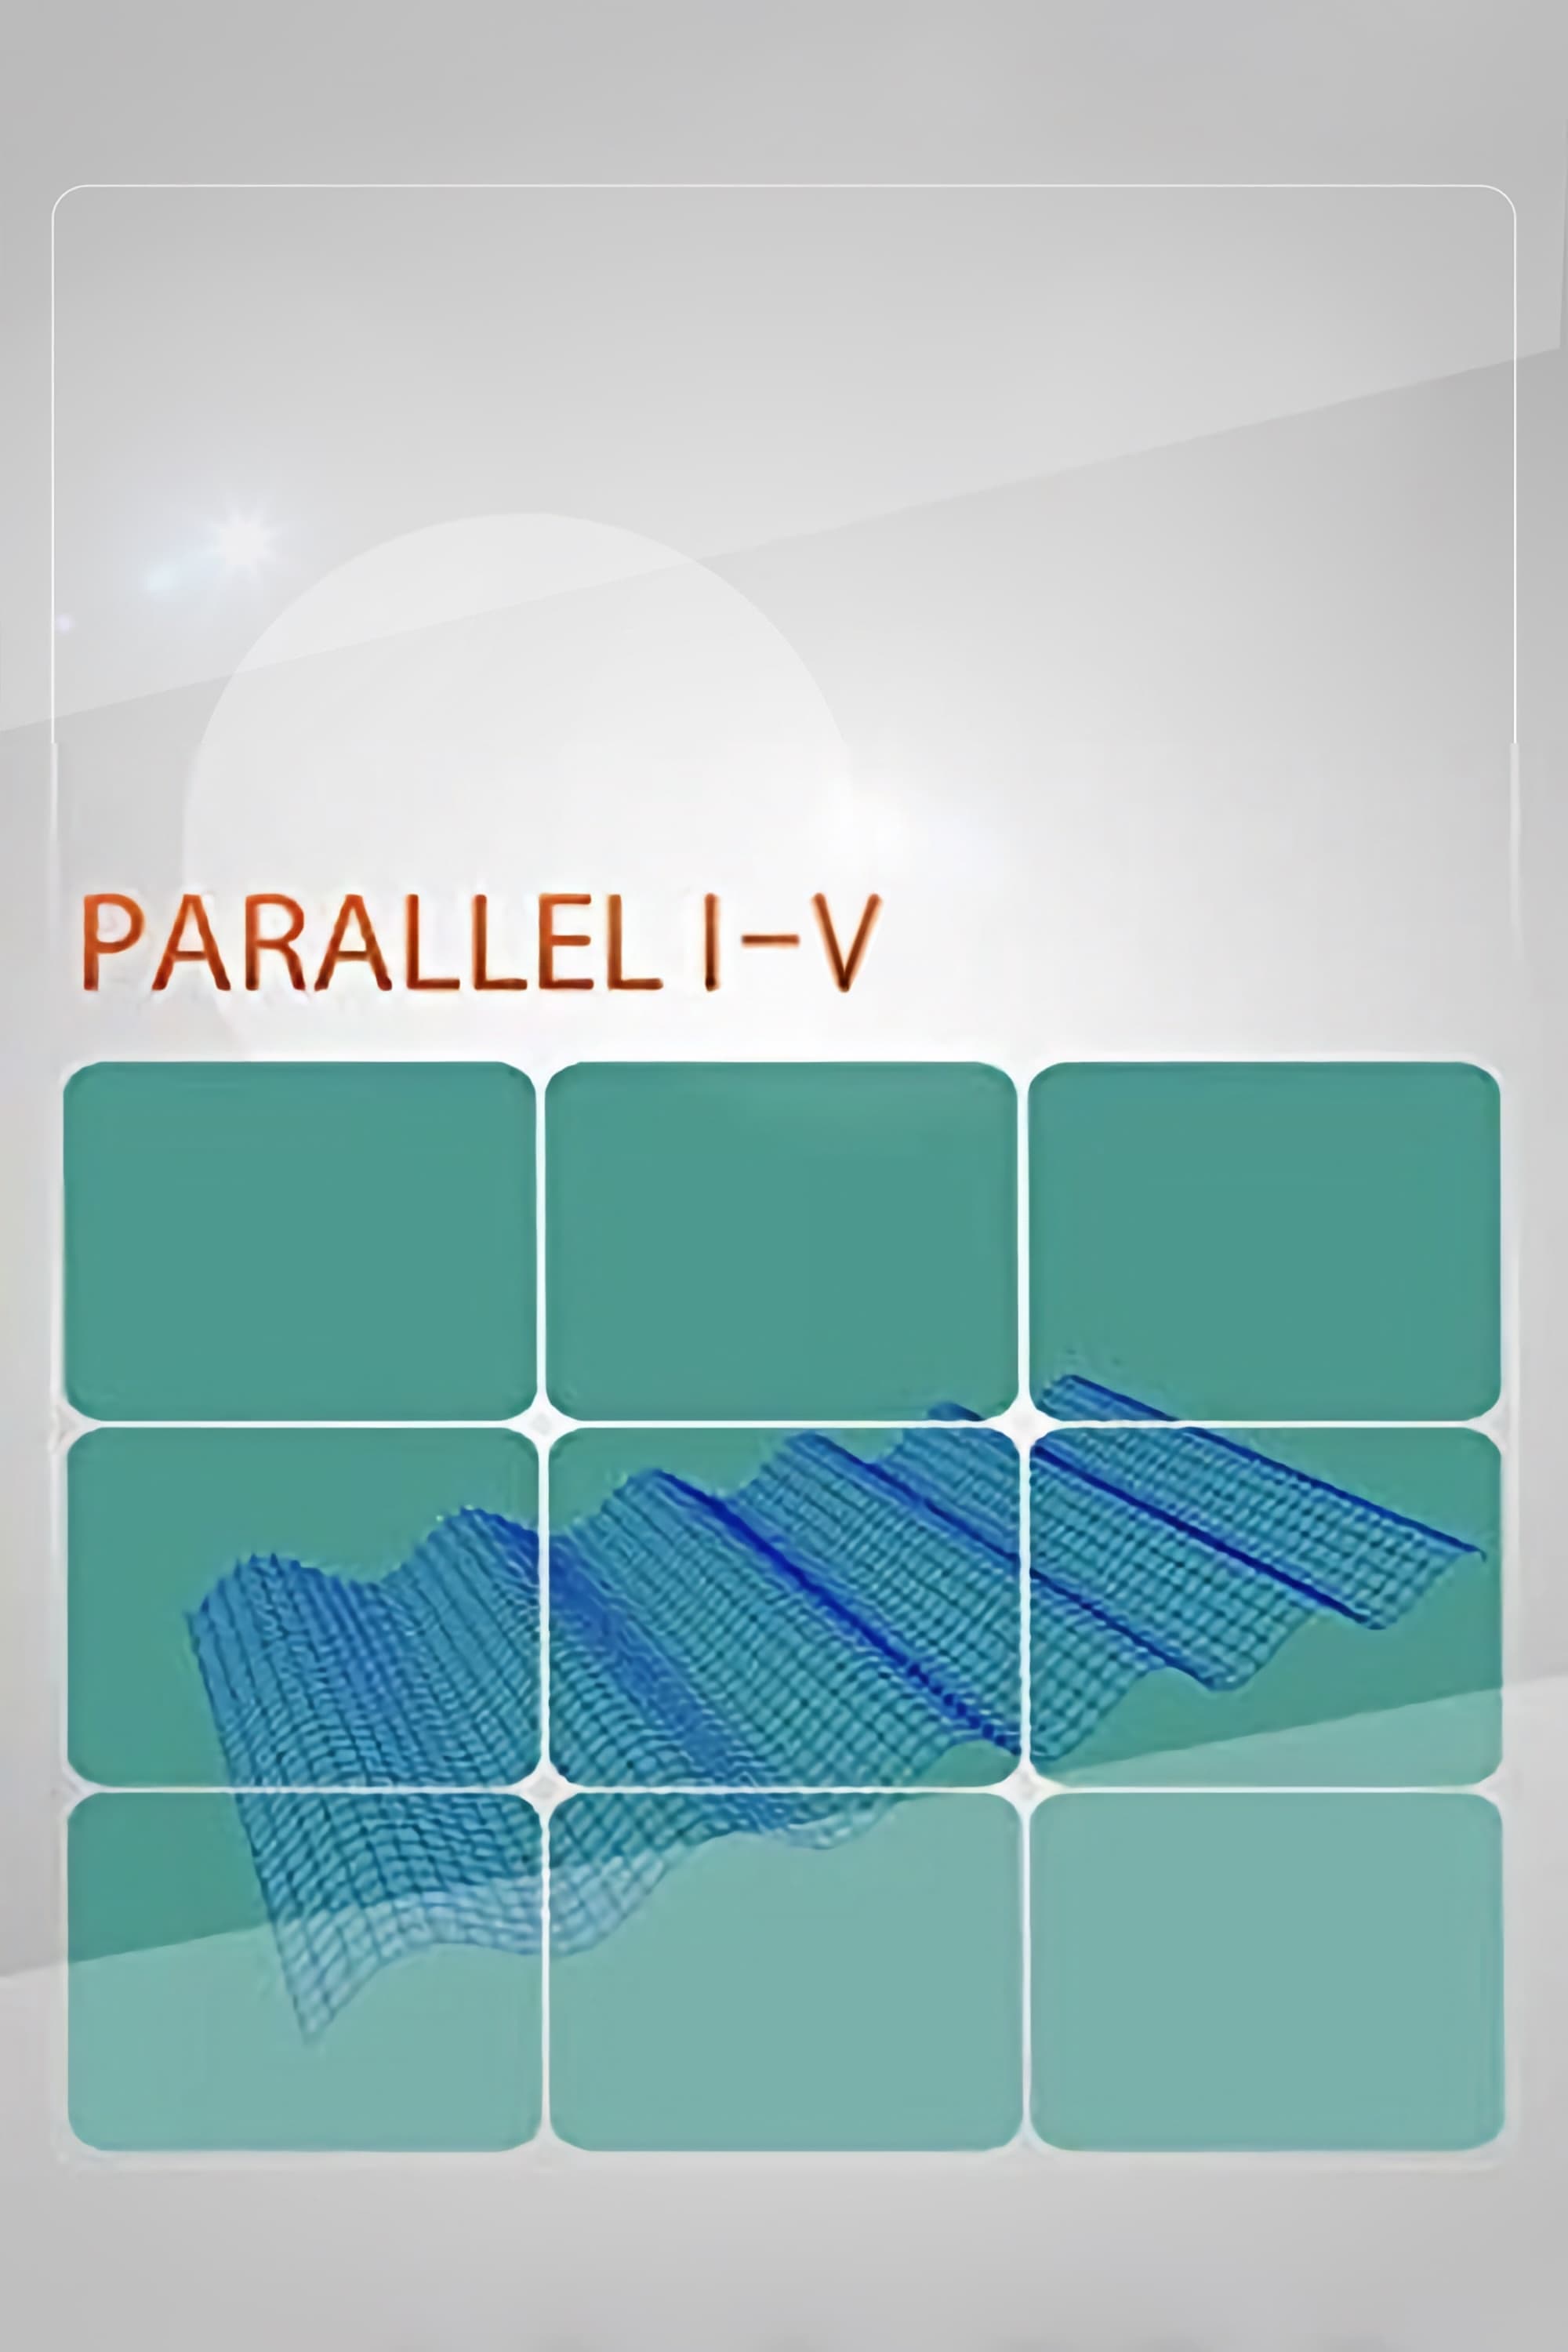 Parallel I–IV